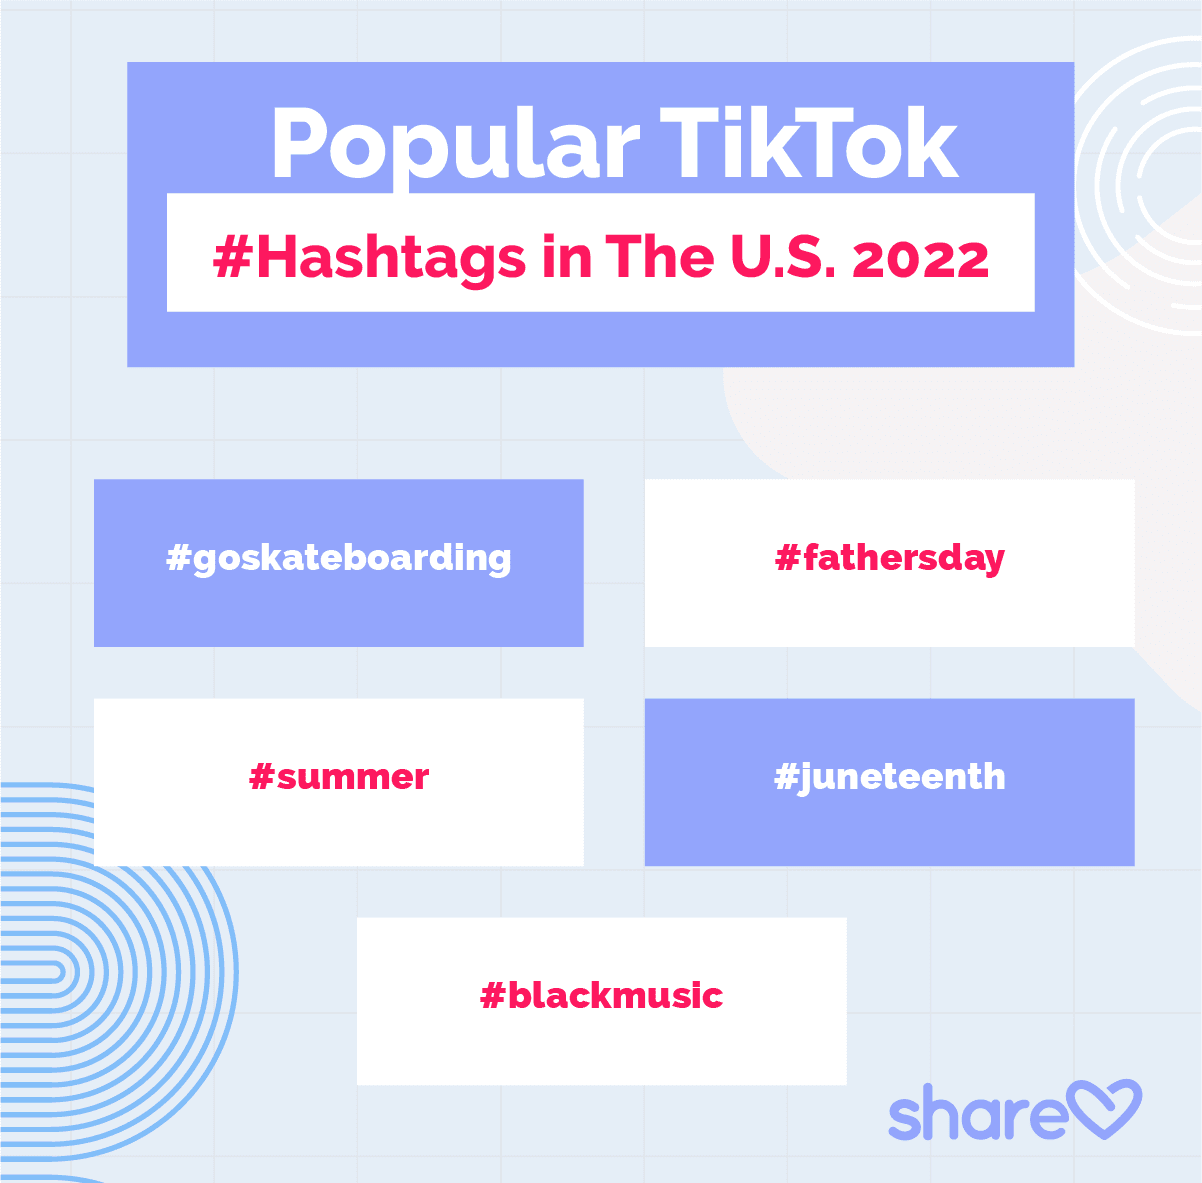 Most Popular TikTok Hashtags in The U.S.